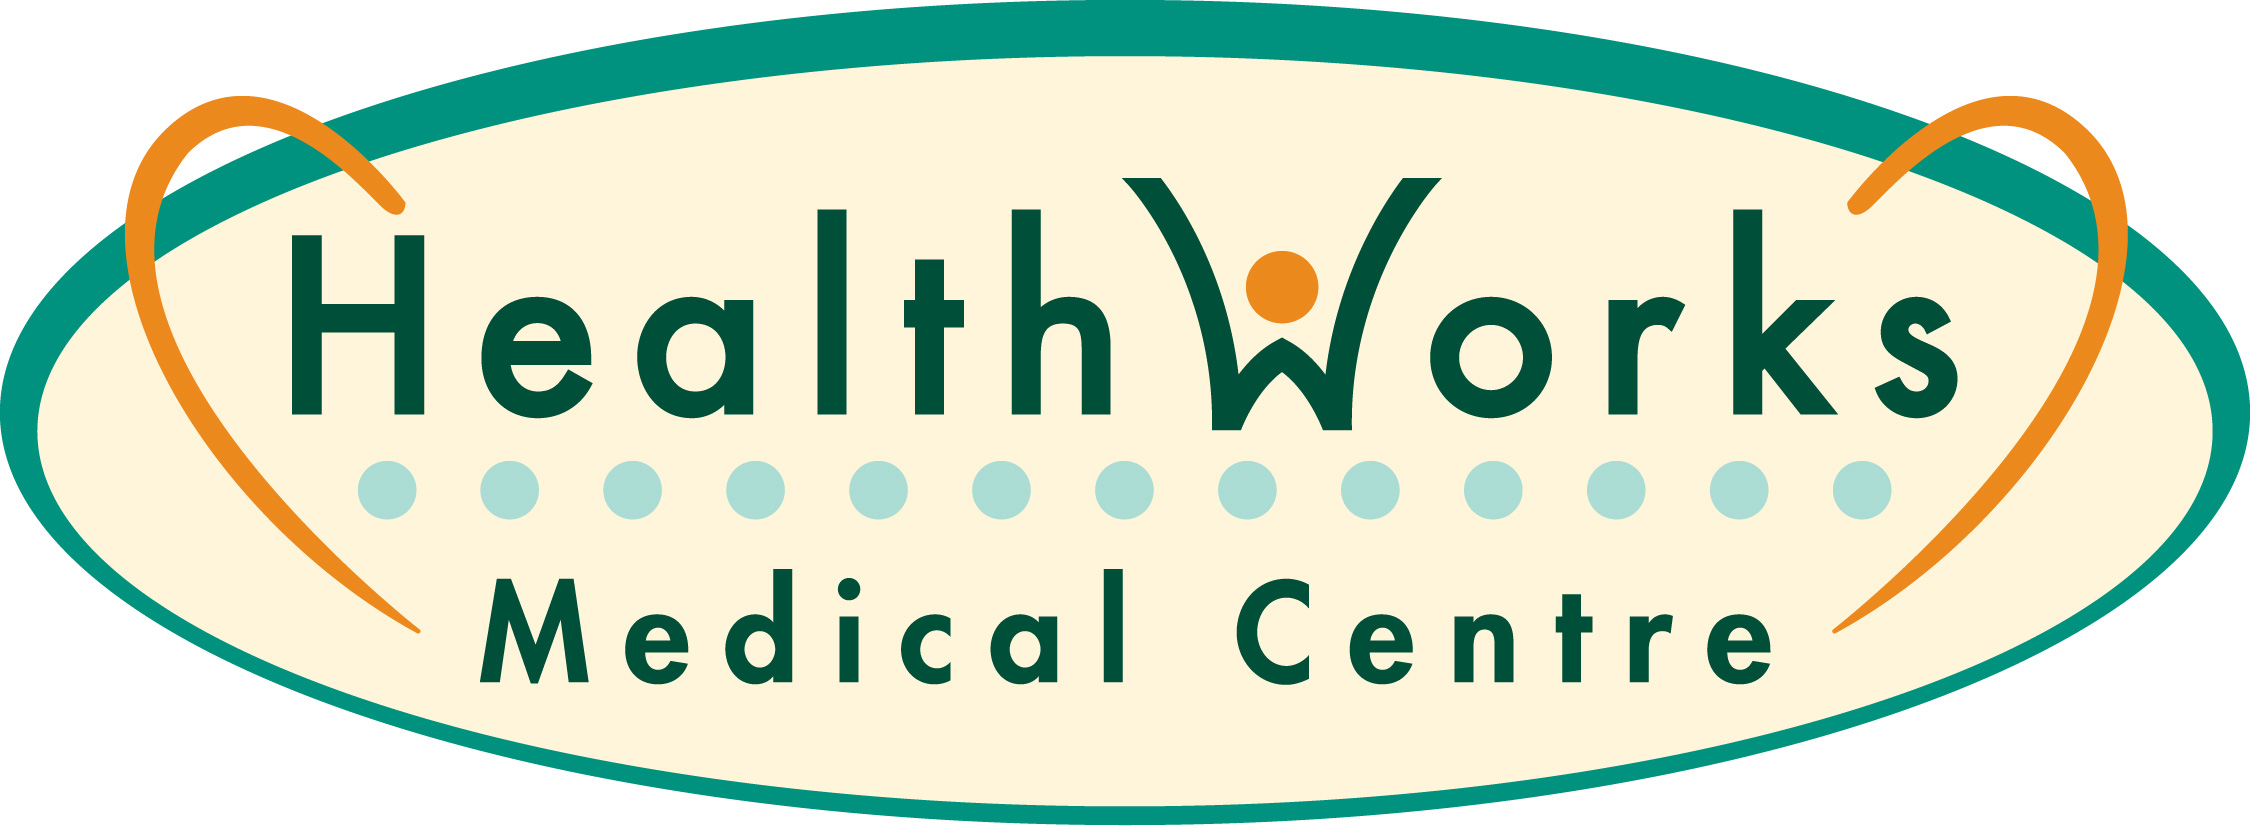 Health & Medical Logos